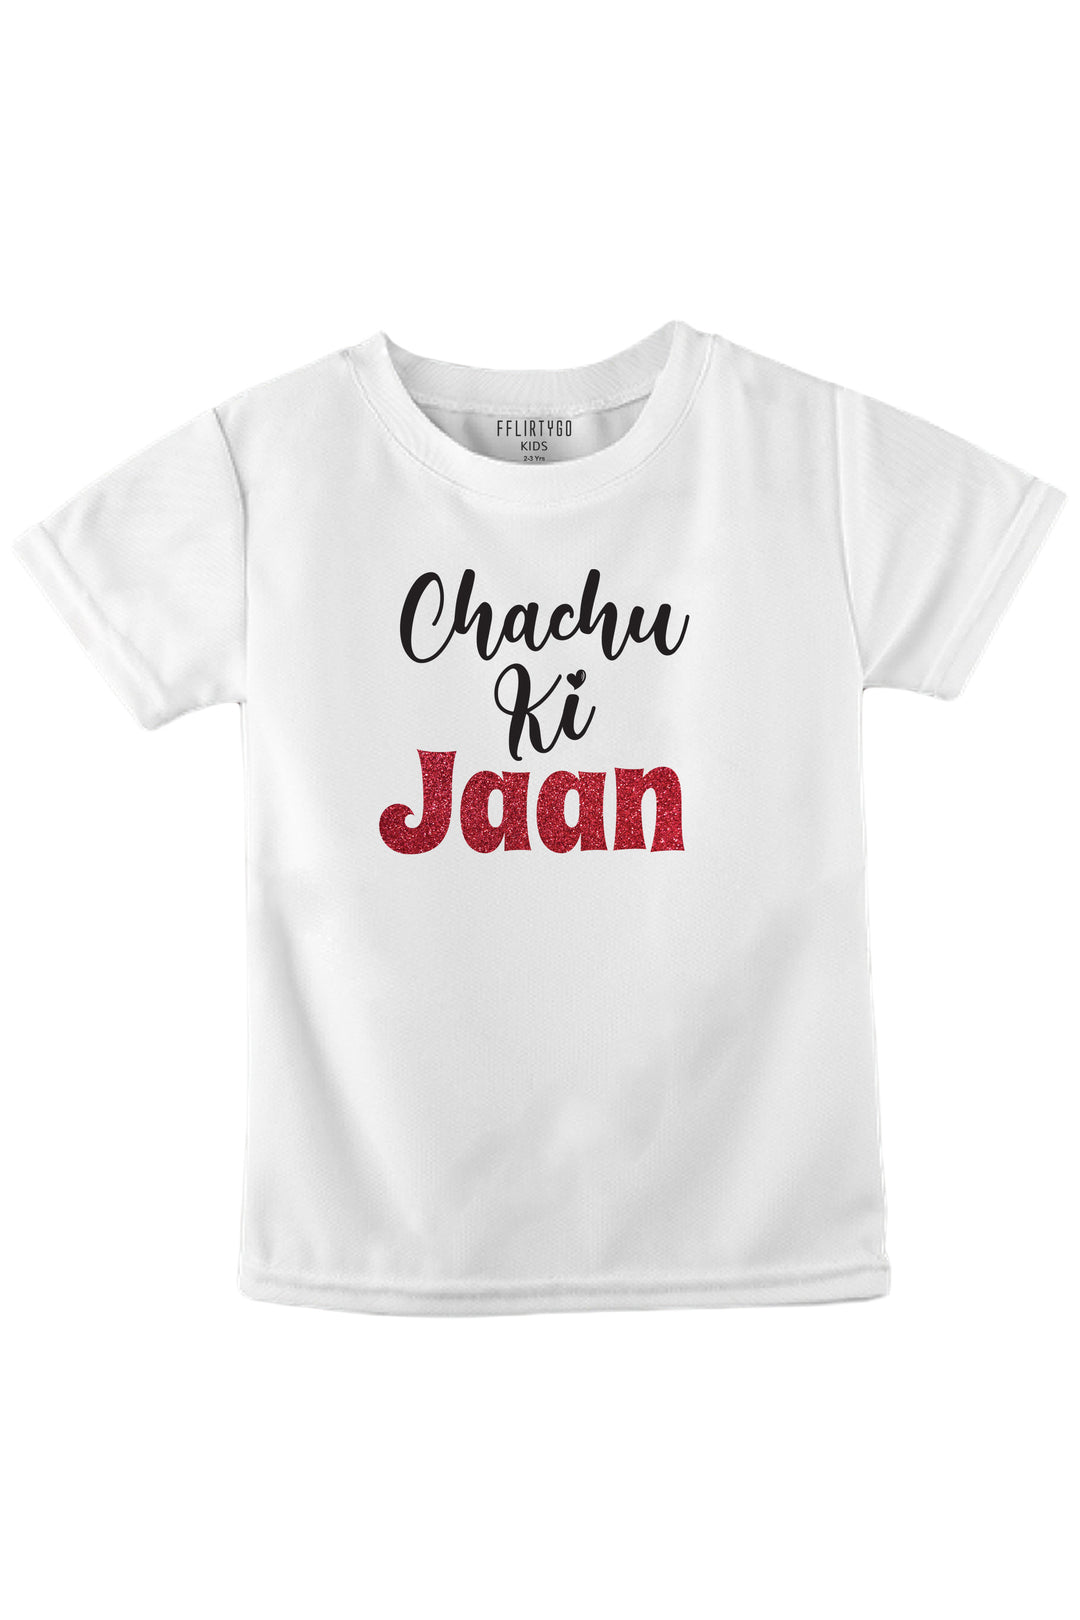 Chachu Ki Jaan